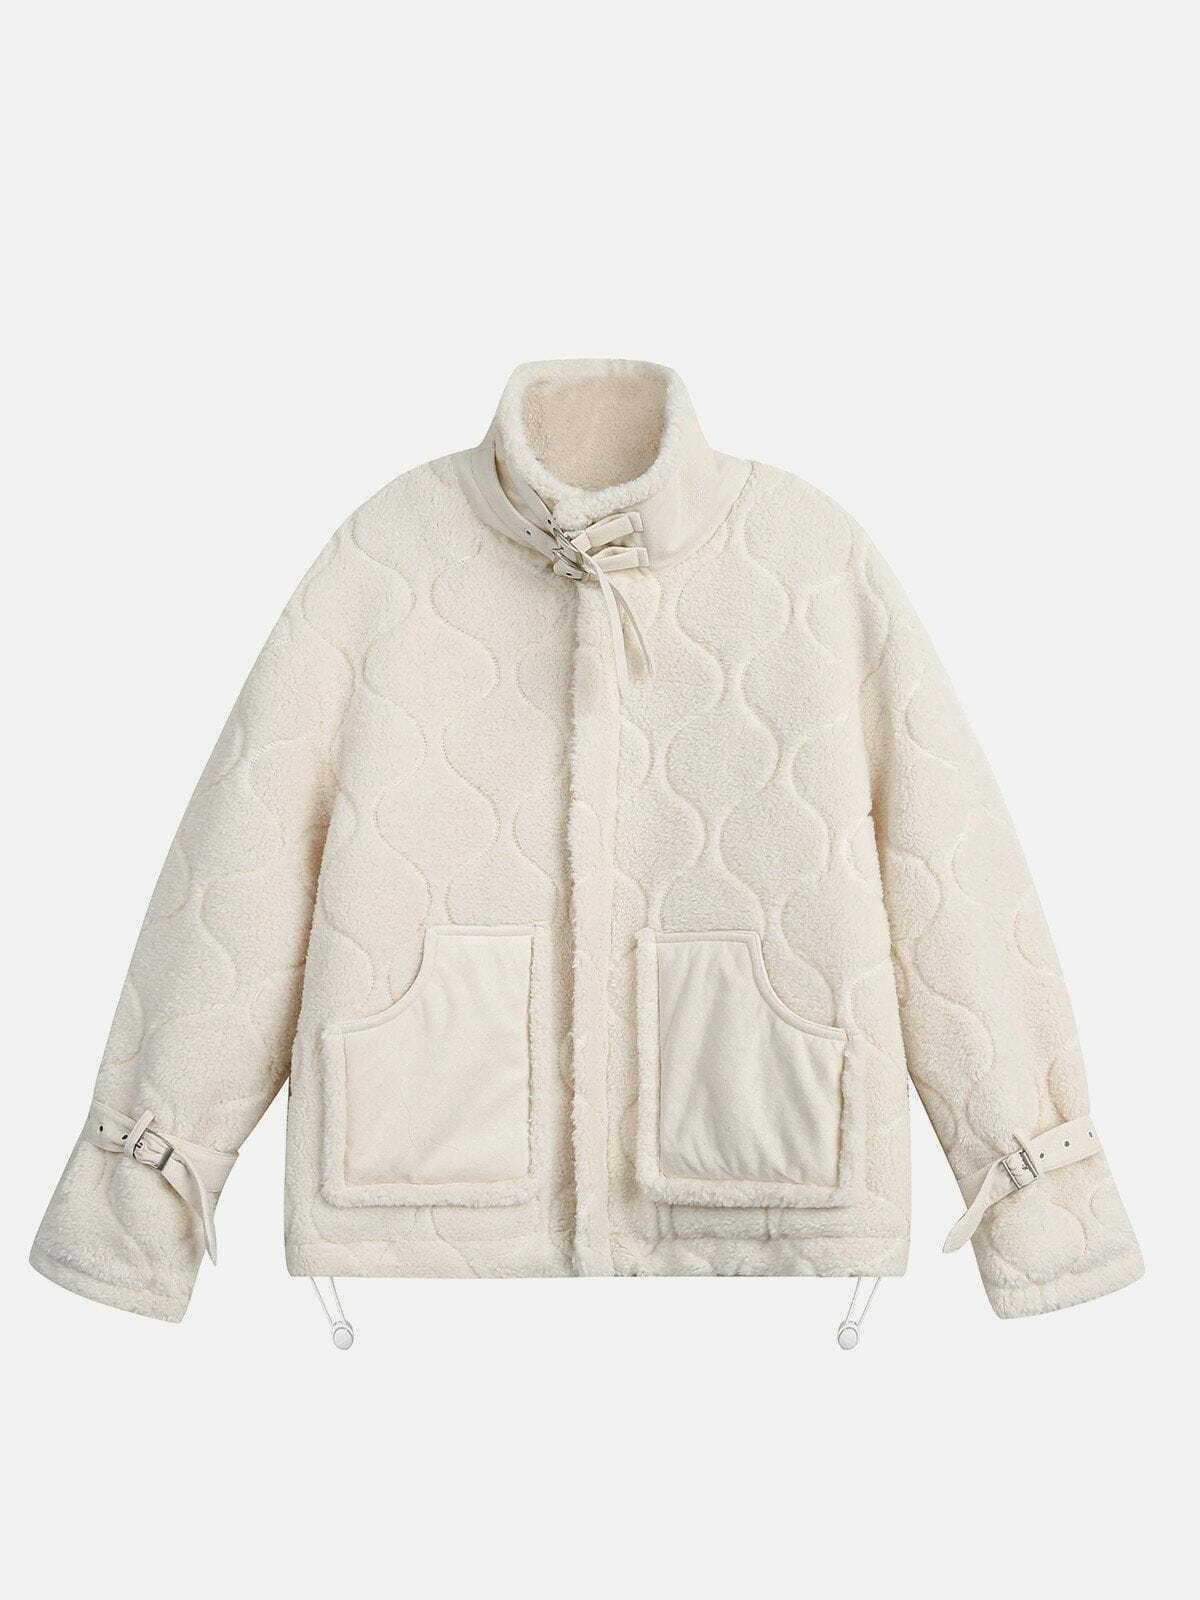 youthful big pocket sherpa coat   chic & cozy streetwear 1166